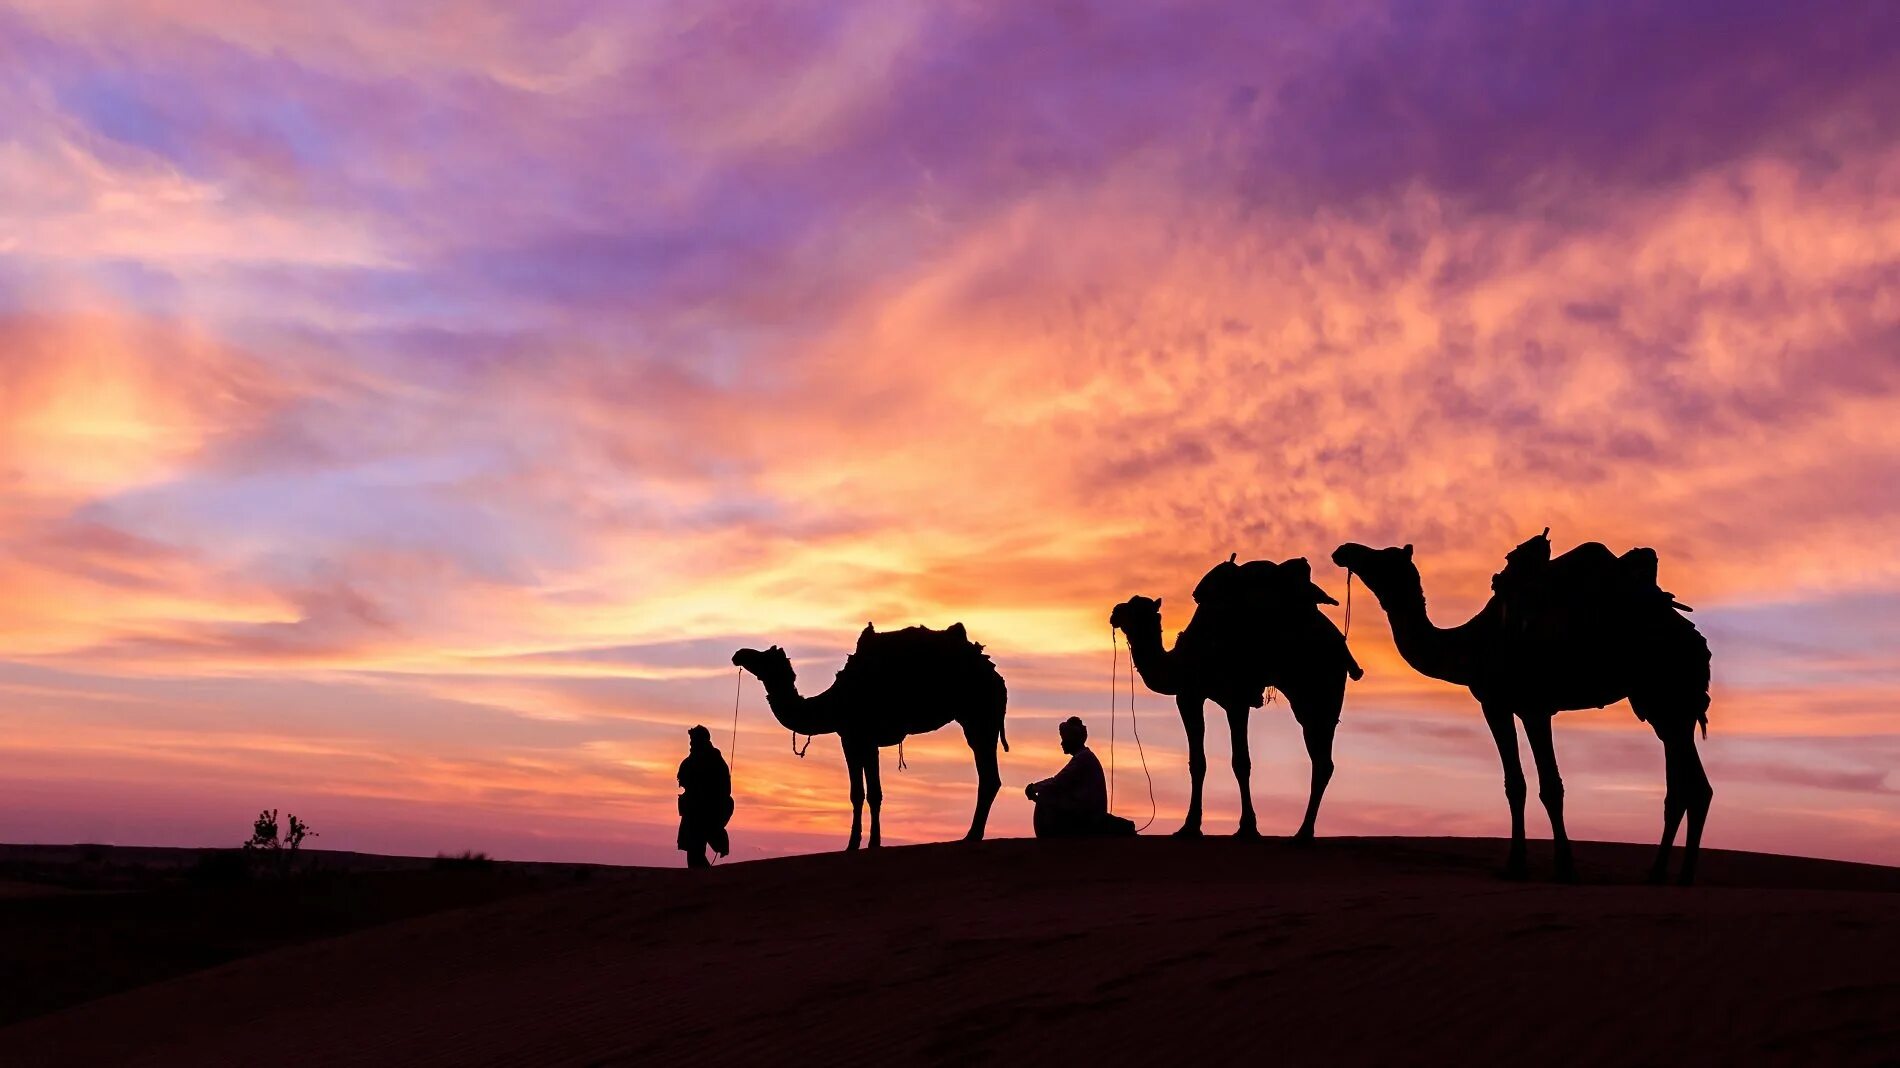 Караван открыт. Караван с верблюдами в пустыне. Караван Аравийской пустыне ОАЭ. Арабы с караваном в пустыне. Караван верблюдов в пустыне.